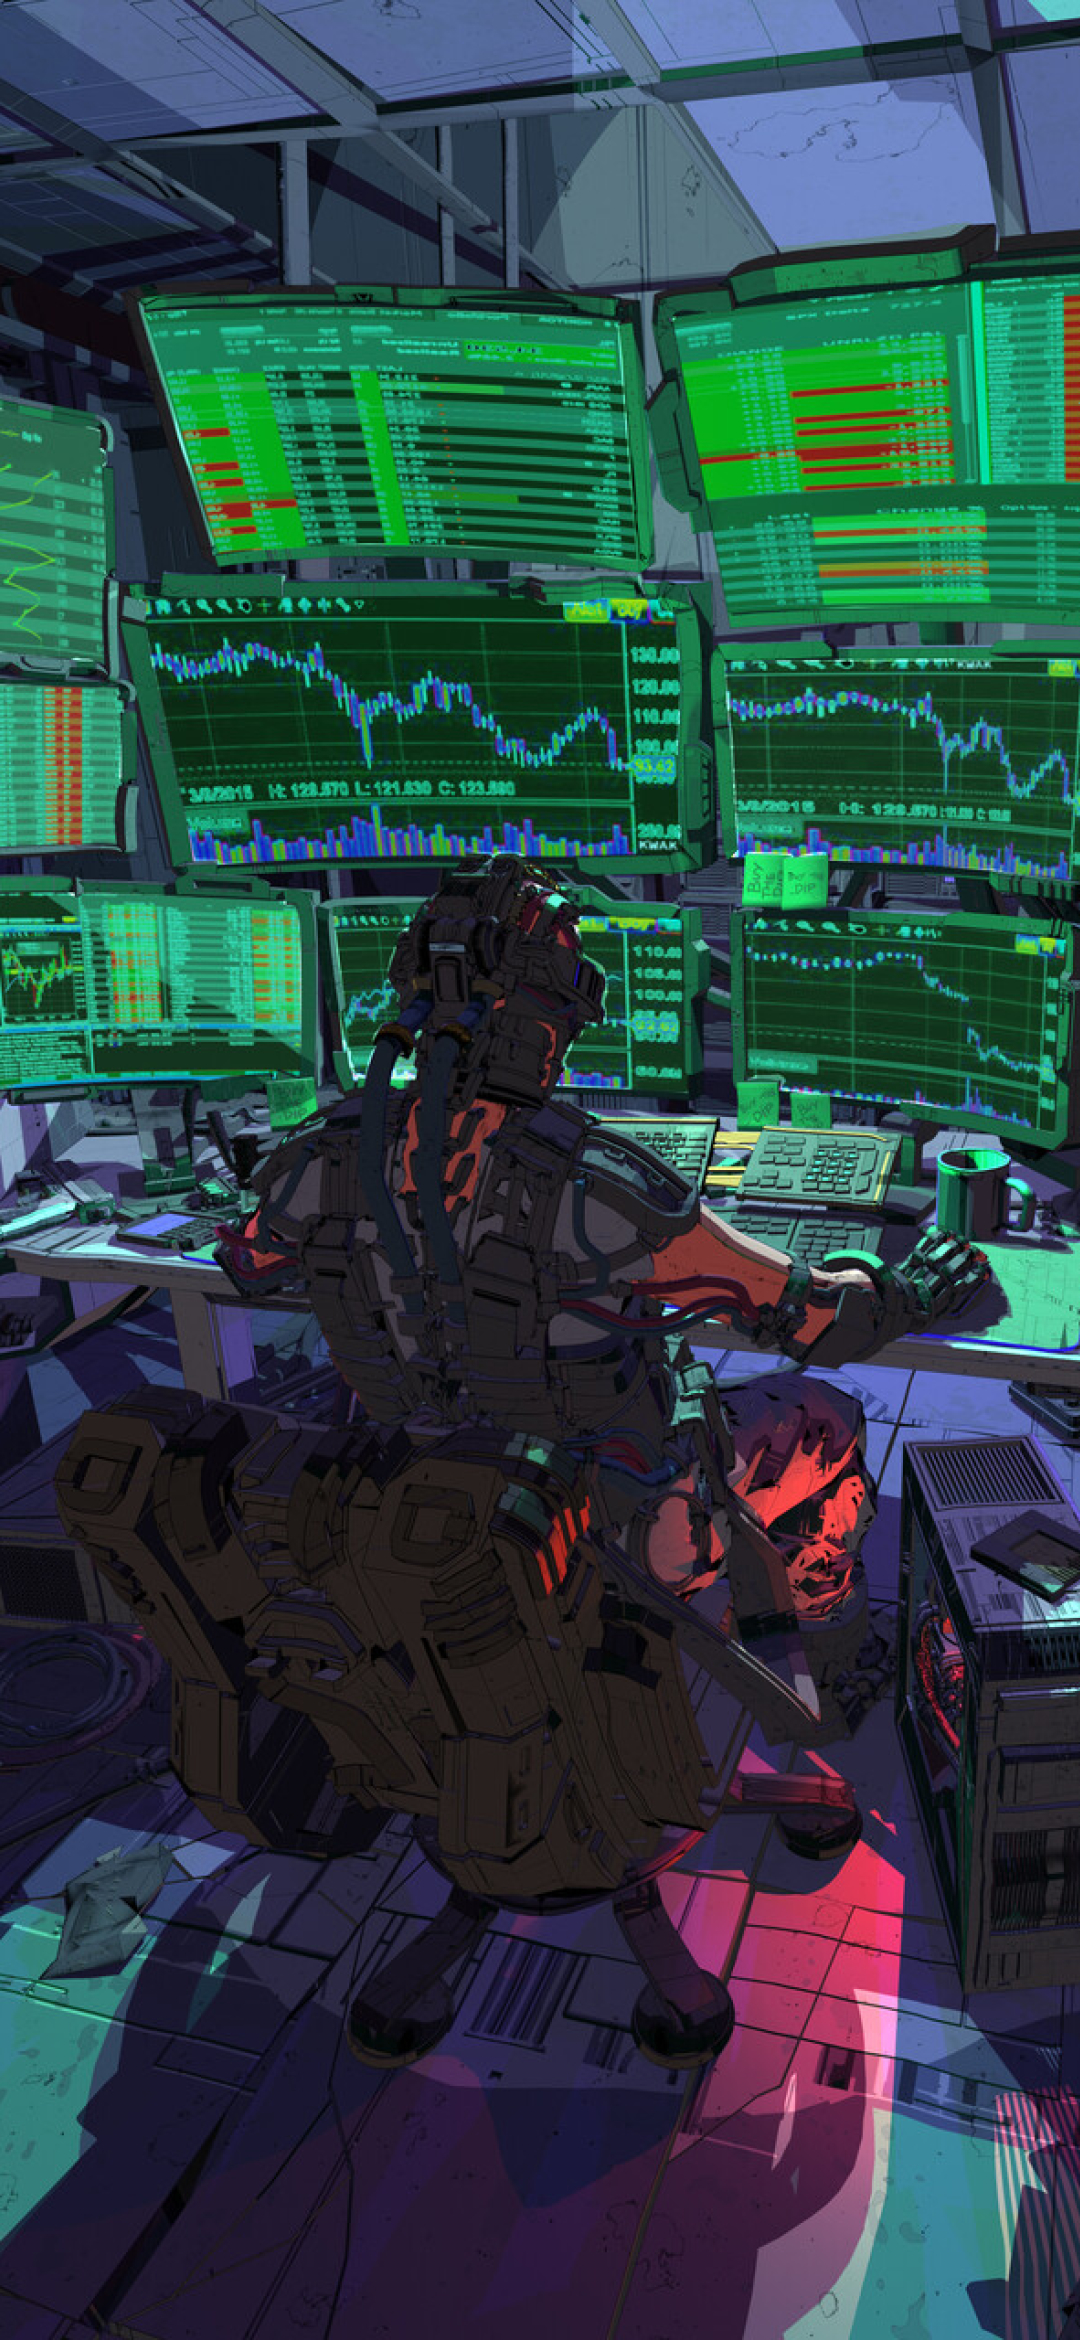 1080x2340 Cyberpunk Robot Hacking Stock Market 1080x2340 Resolution  Wallpaper, HD Artist 4K Wallpapers, Images, Photos and Background -  Wallpapers Den